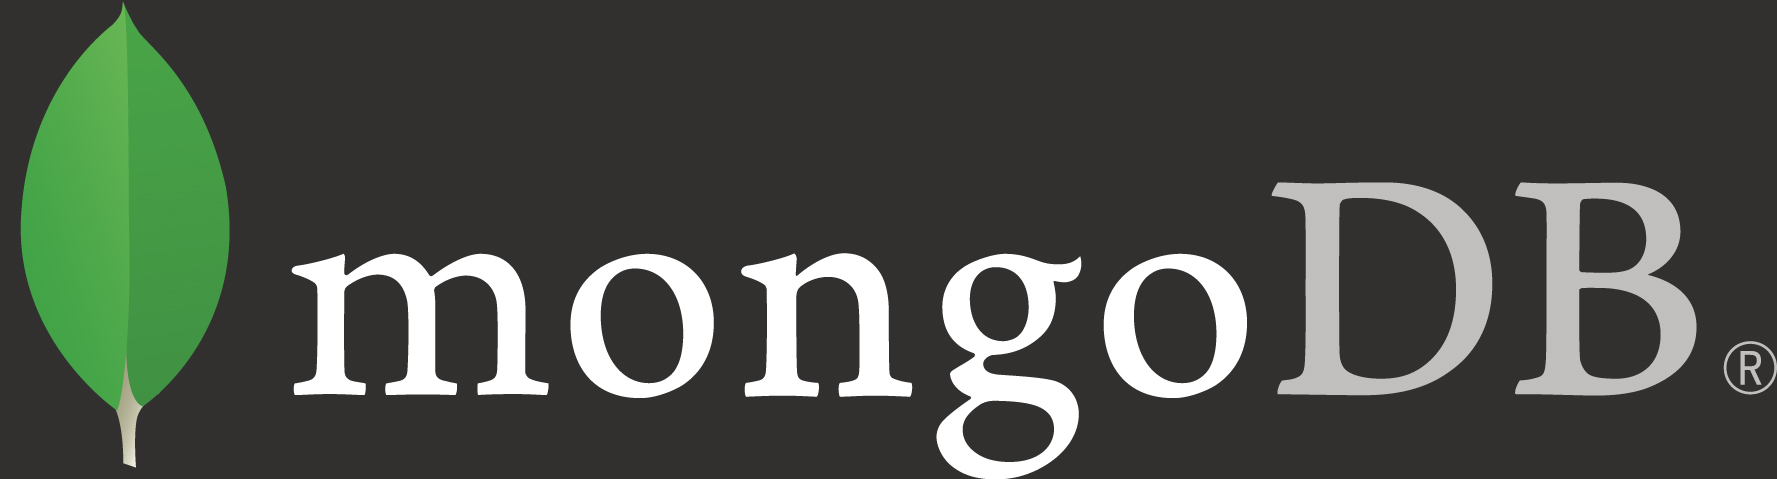 Esportare i dati da WordPress a MongoDB